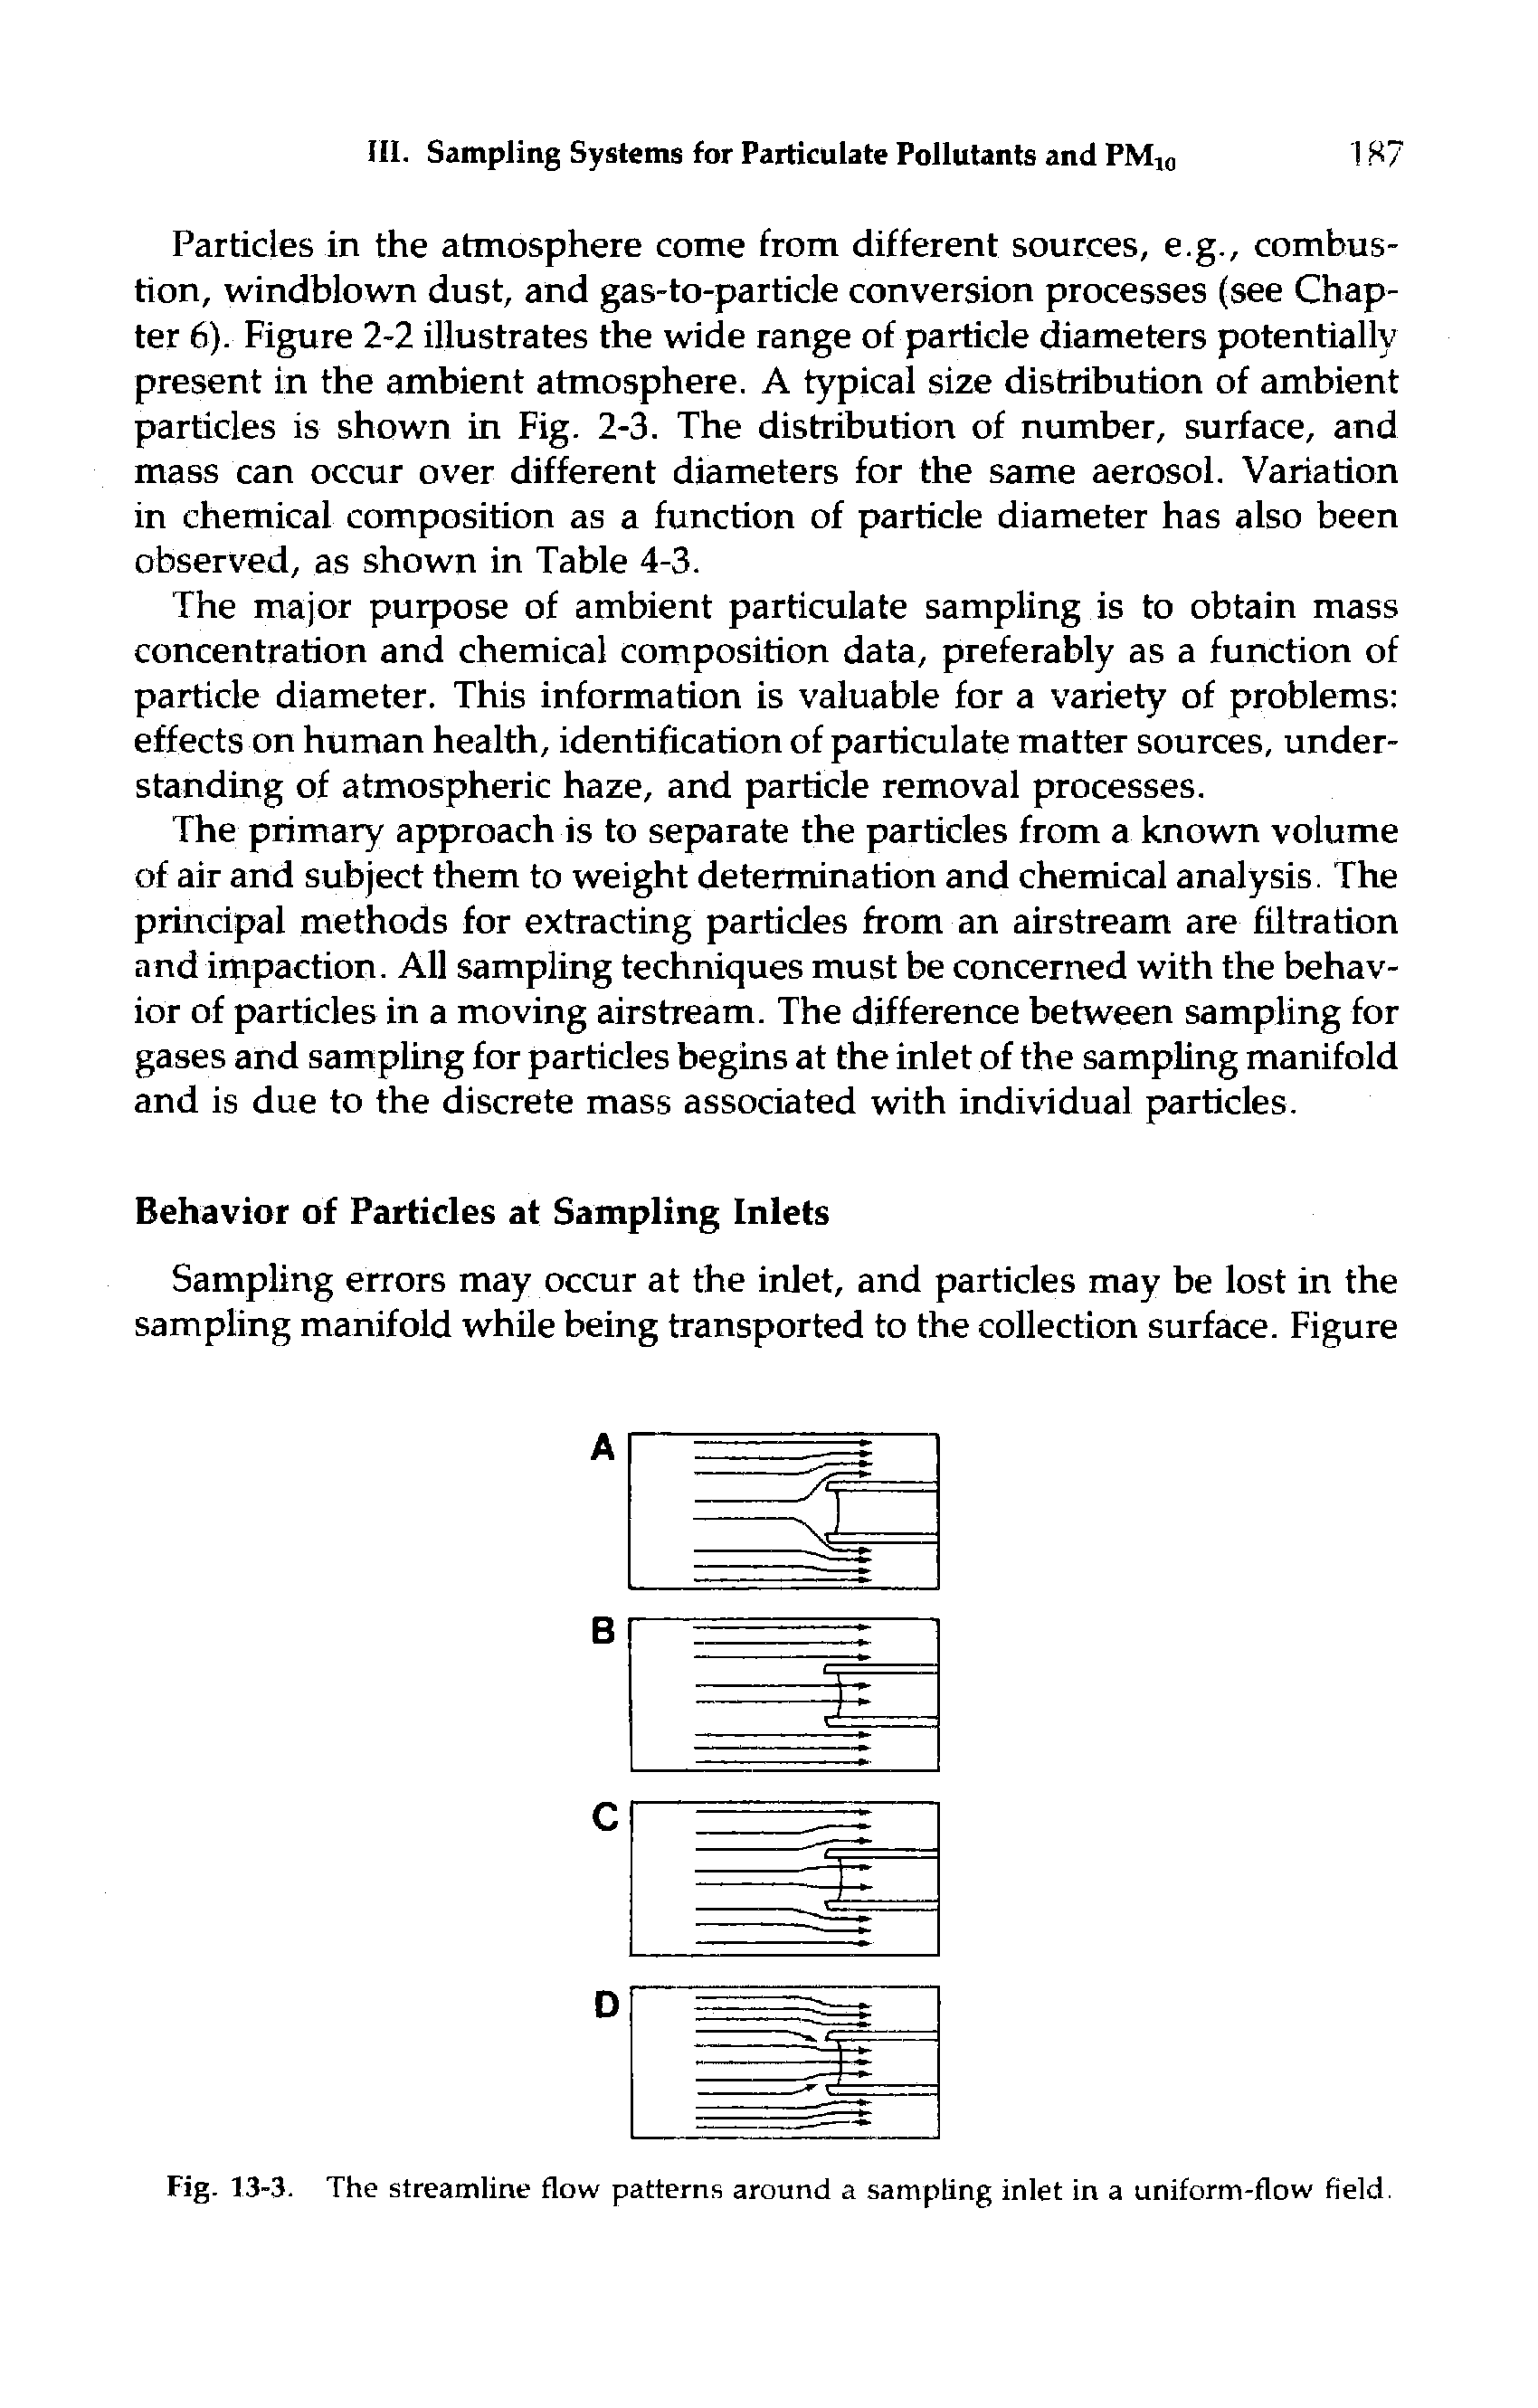 Fig. 13-3. The streamline flow patterns around a sampling inlet in a uniform-flow field.